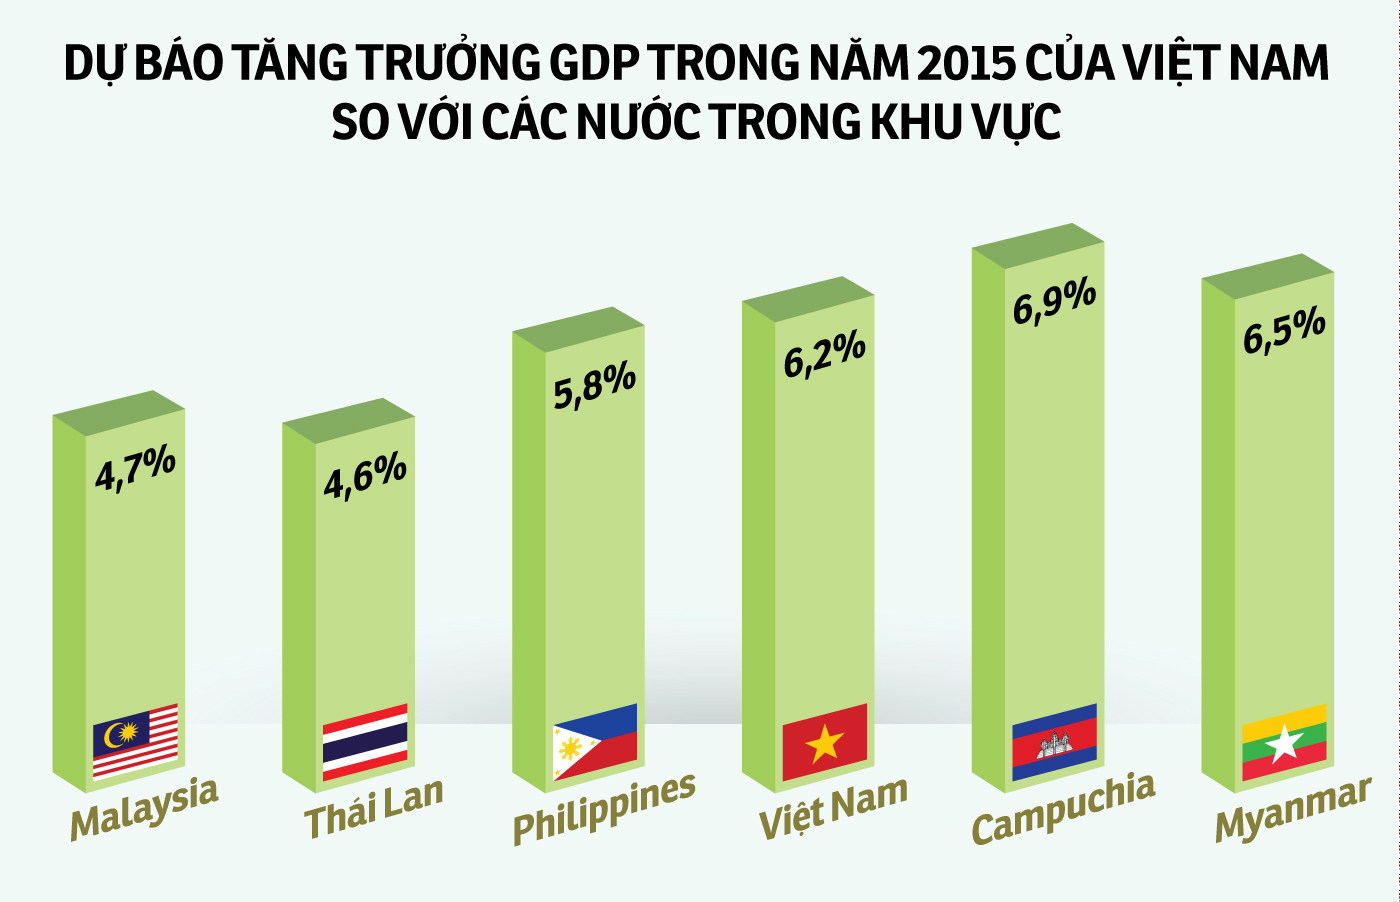 World Bank raises Vietnam’s growth forecast to 6.2%